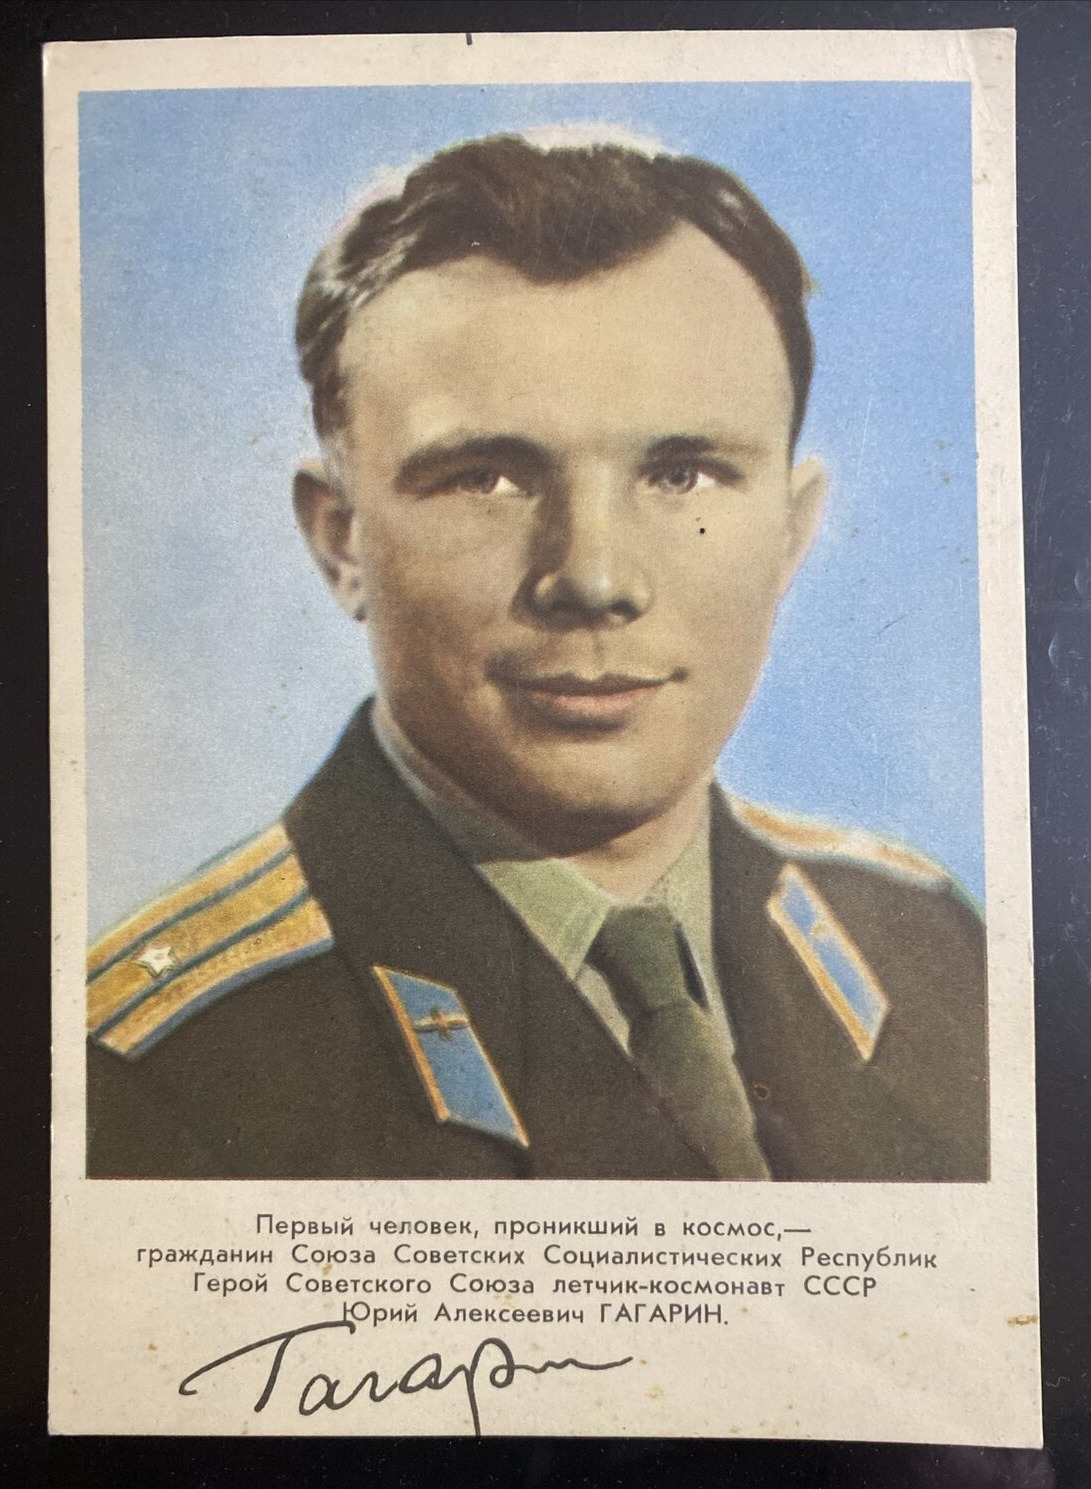 Cosmonaut Yuri Gagarin Card 1st Man in Space Soviet Union 1961